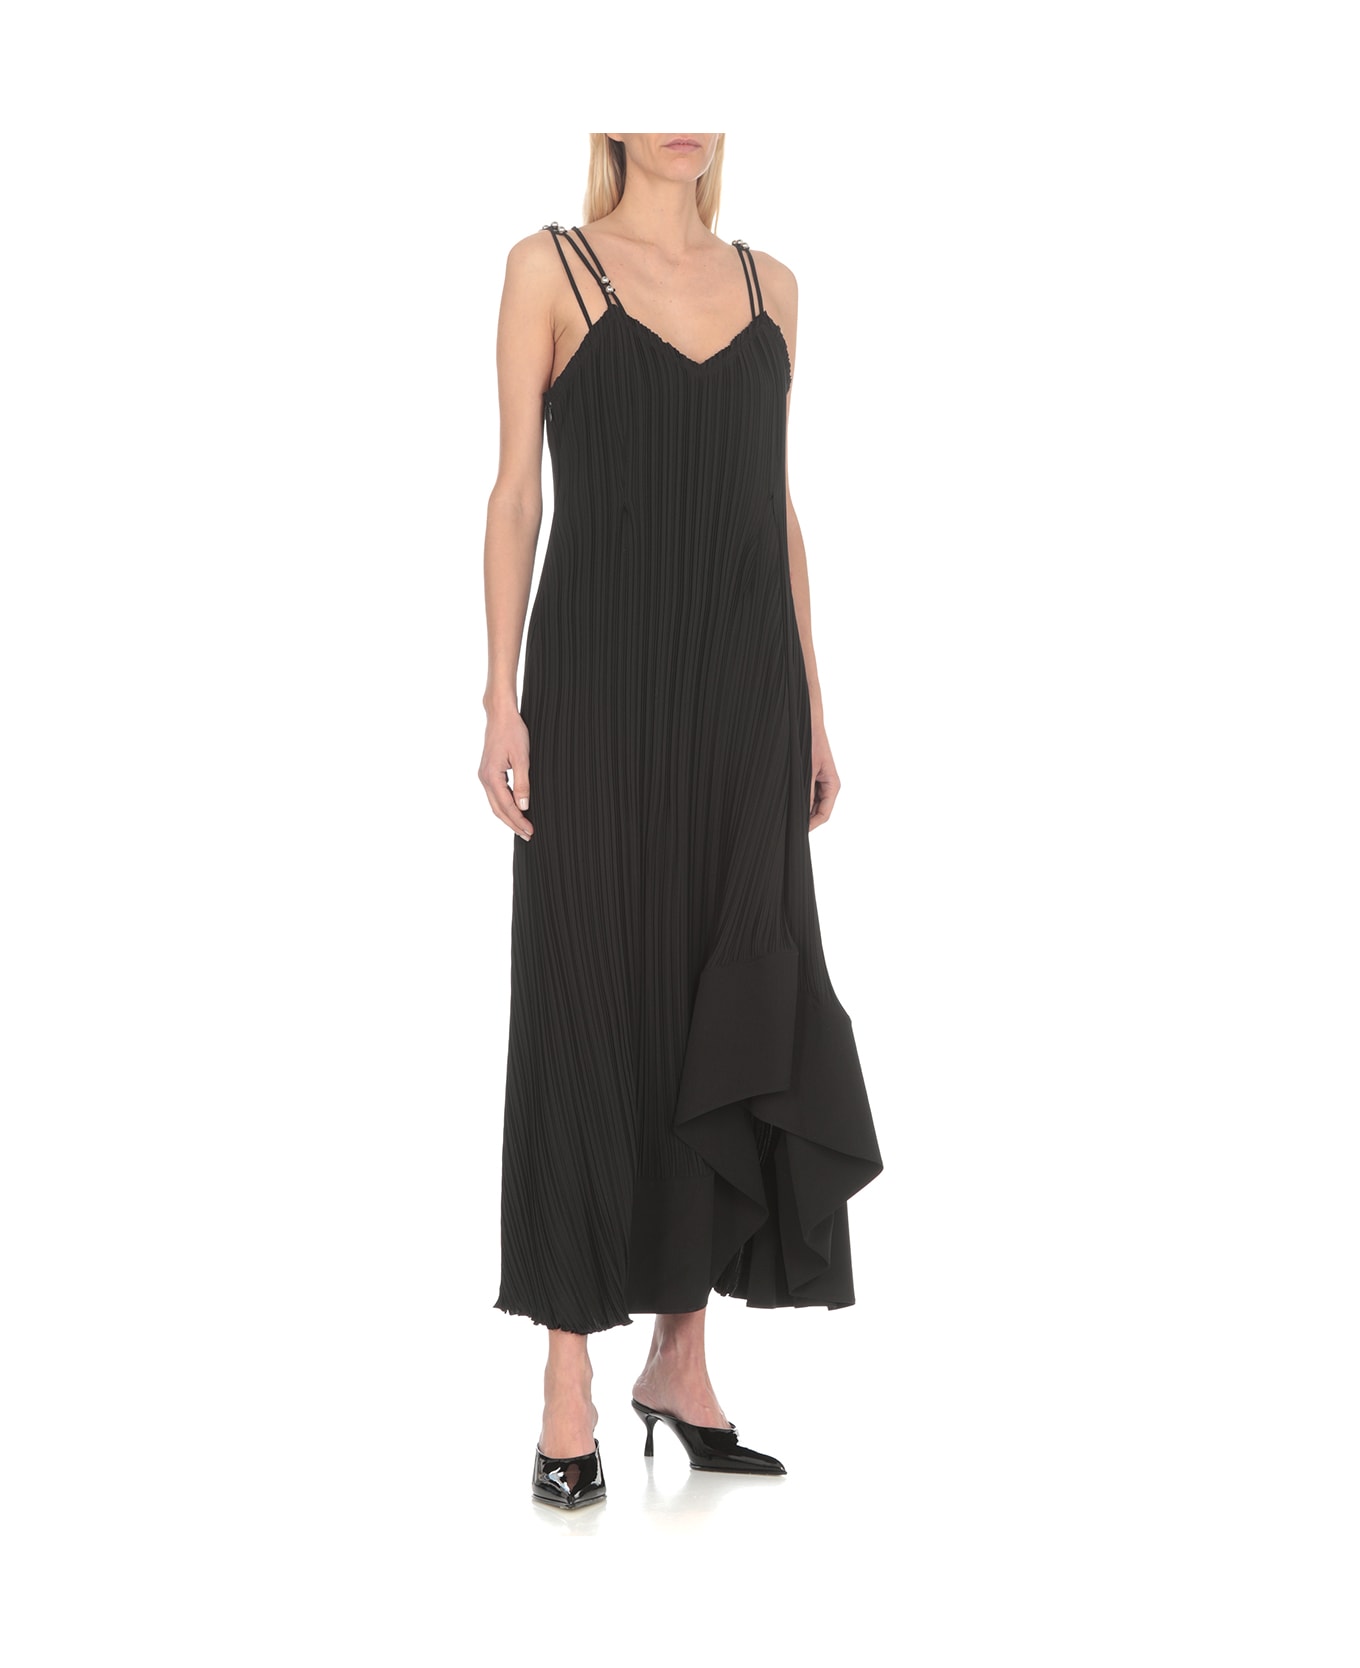 Lanvin Pleated Sleeveless Dress - Black